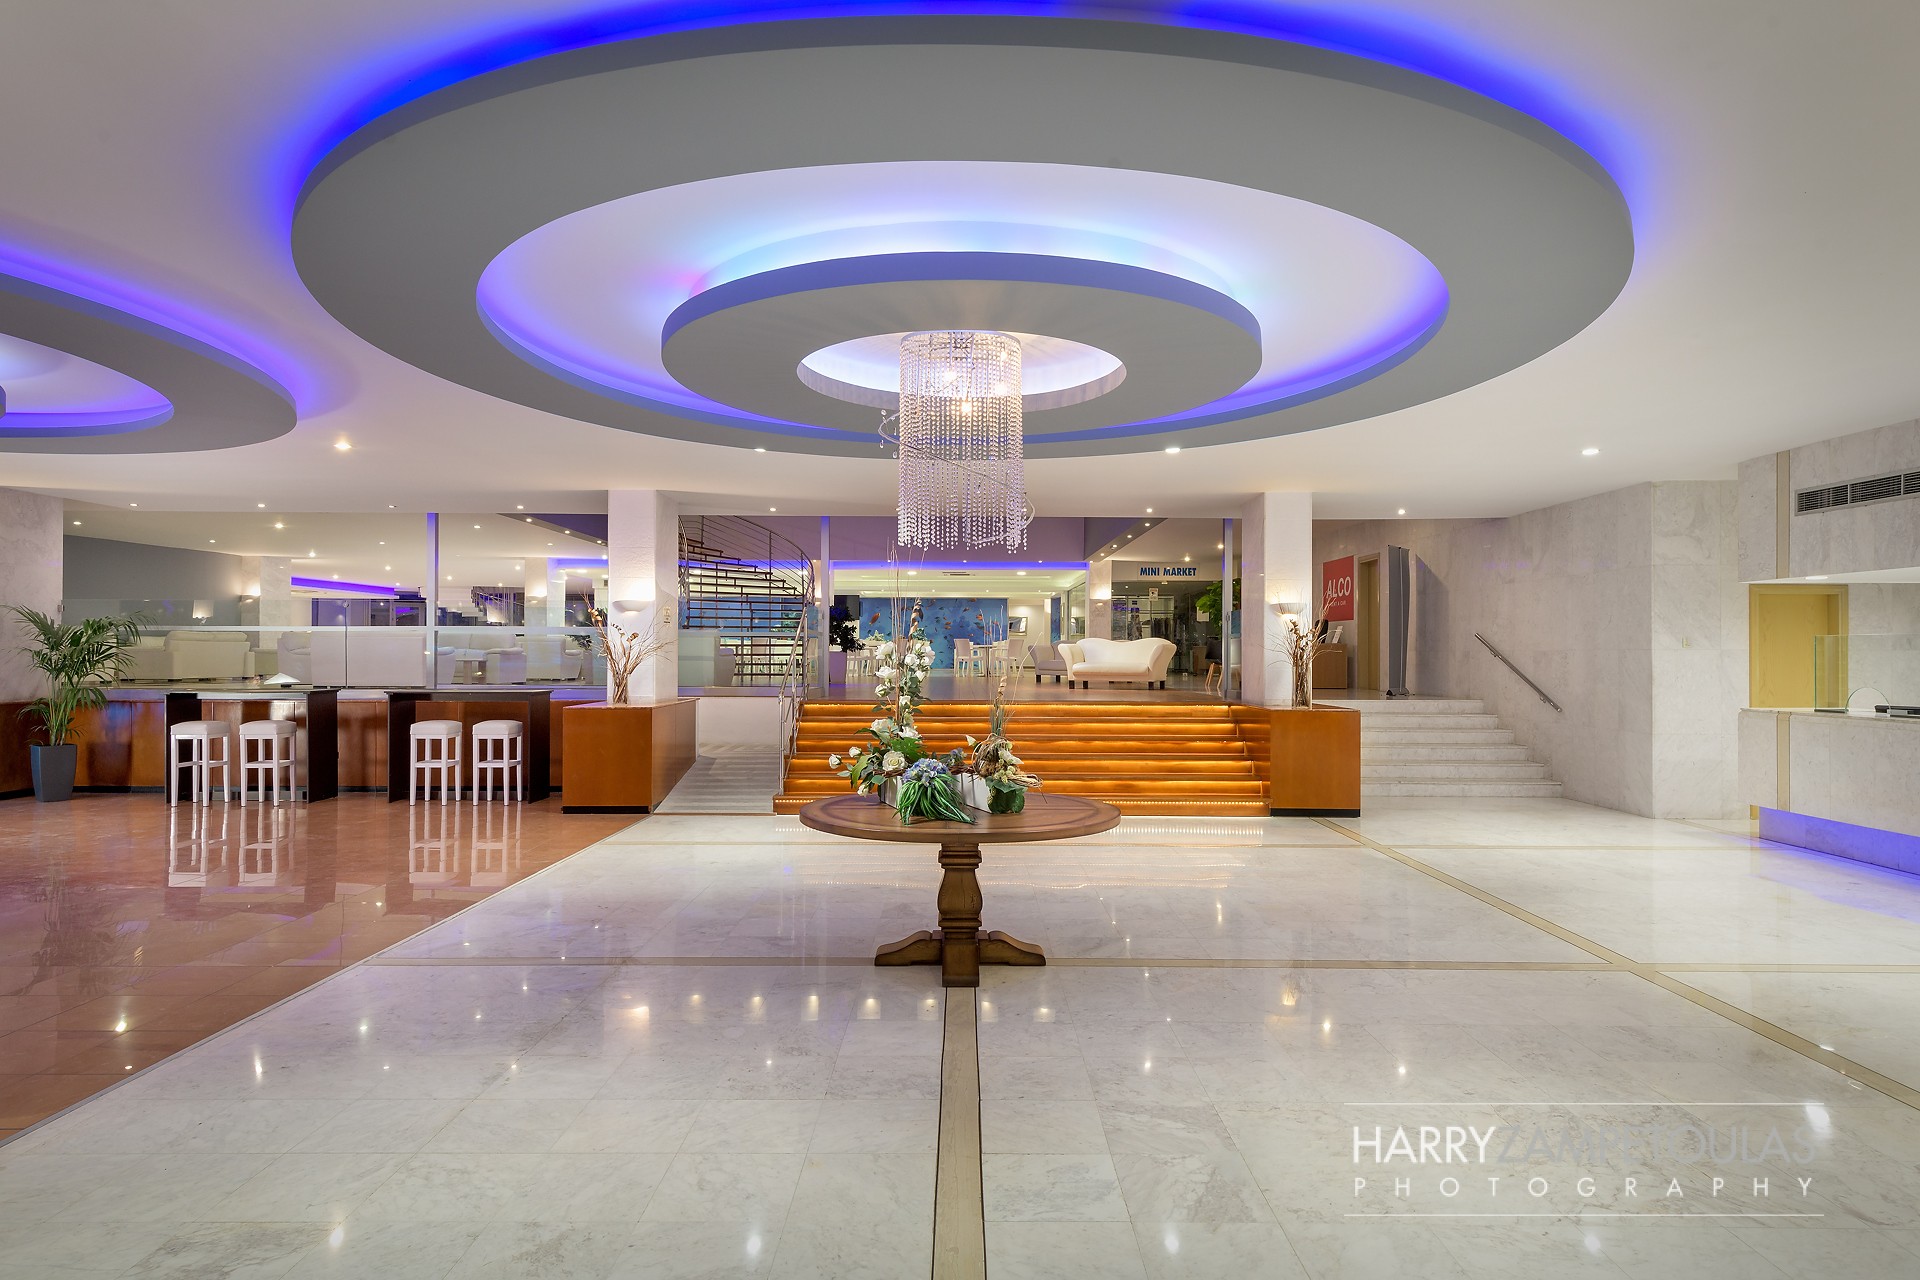 Oceanis-Hotel-Rhodes-Harry-Zampetoulas-Photography-14 Oceanis Hotel Rhodes - Hotel Photography 